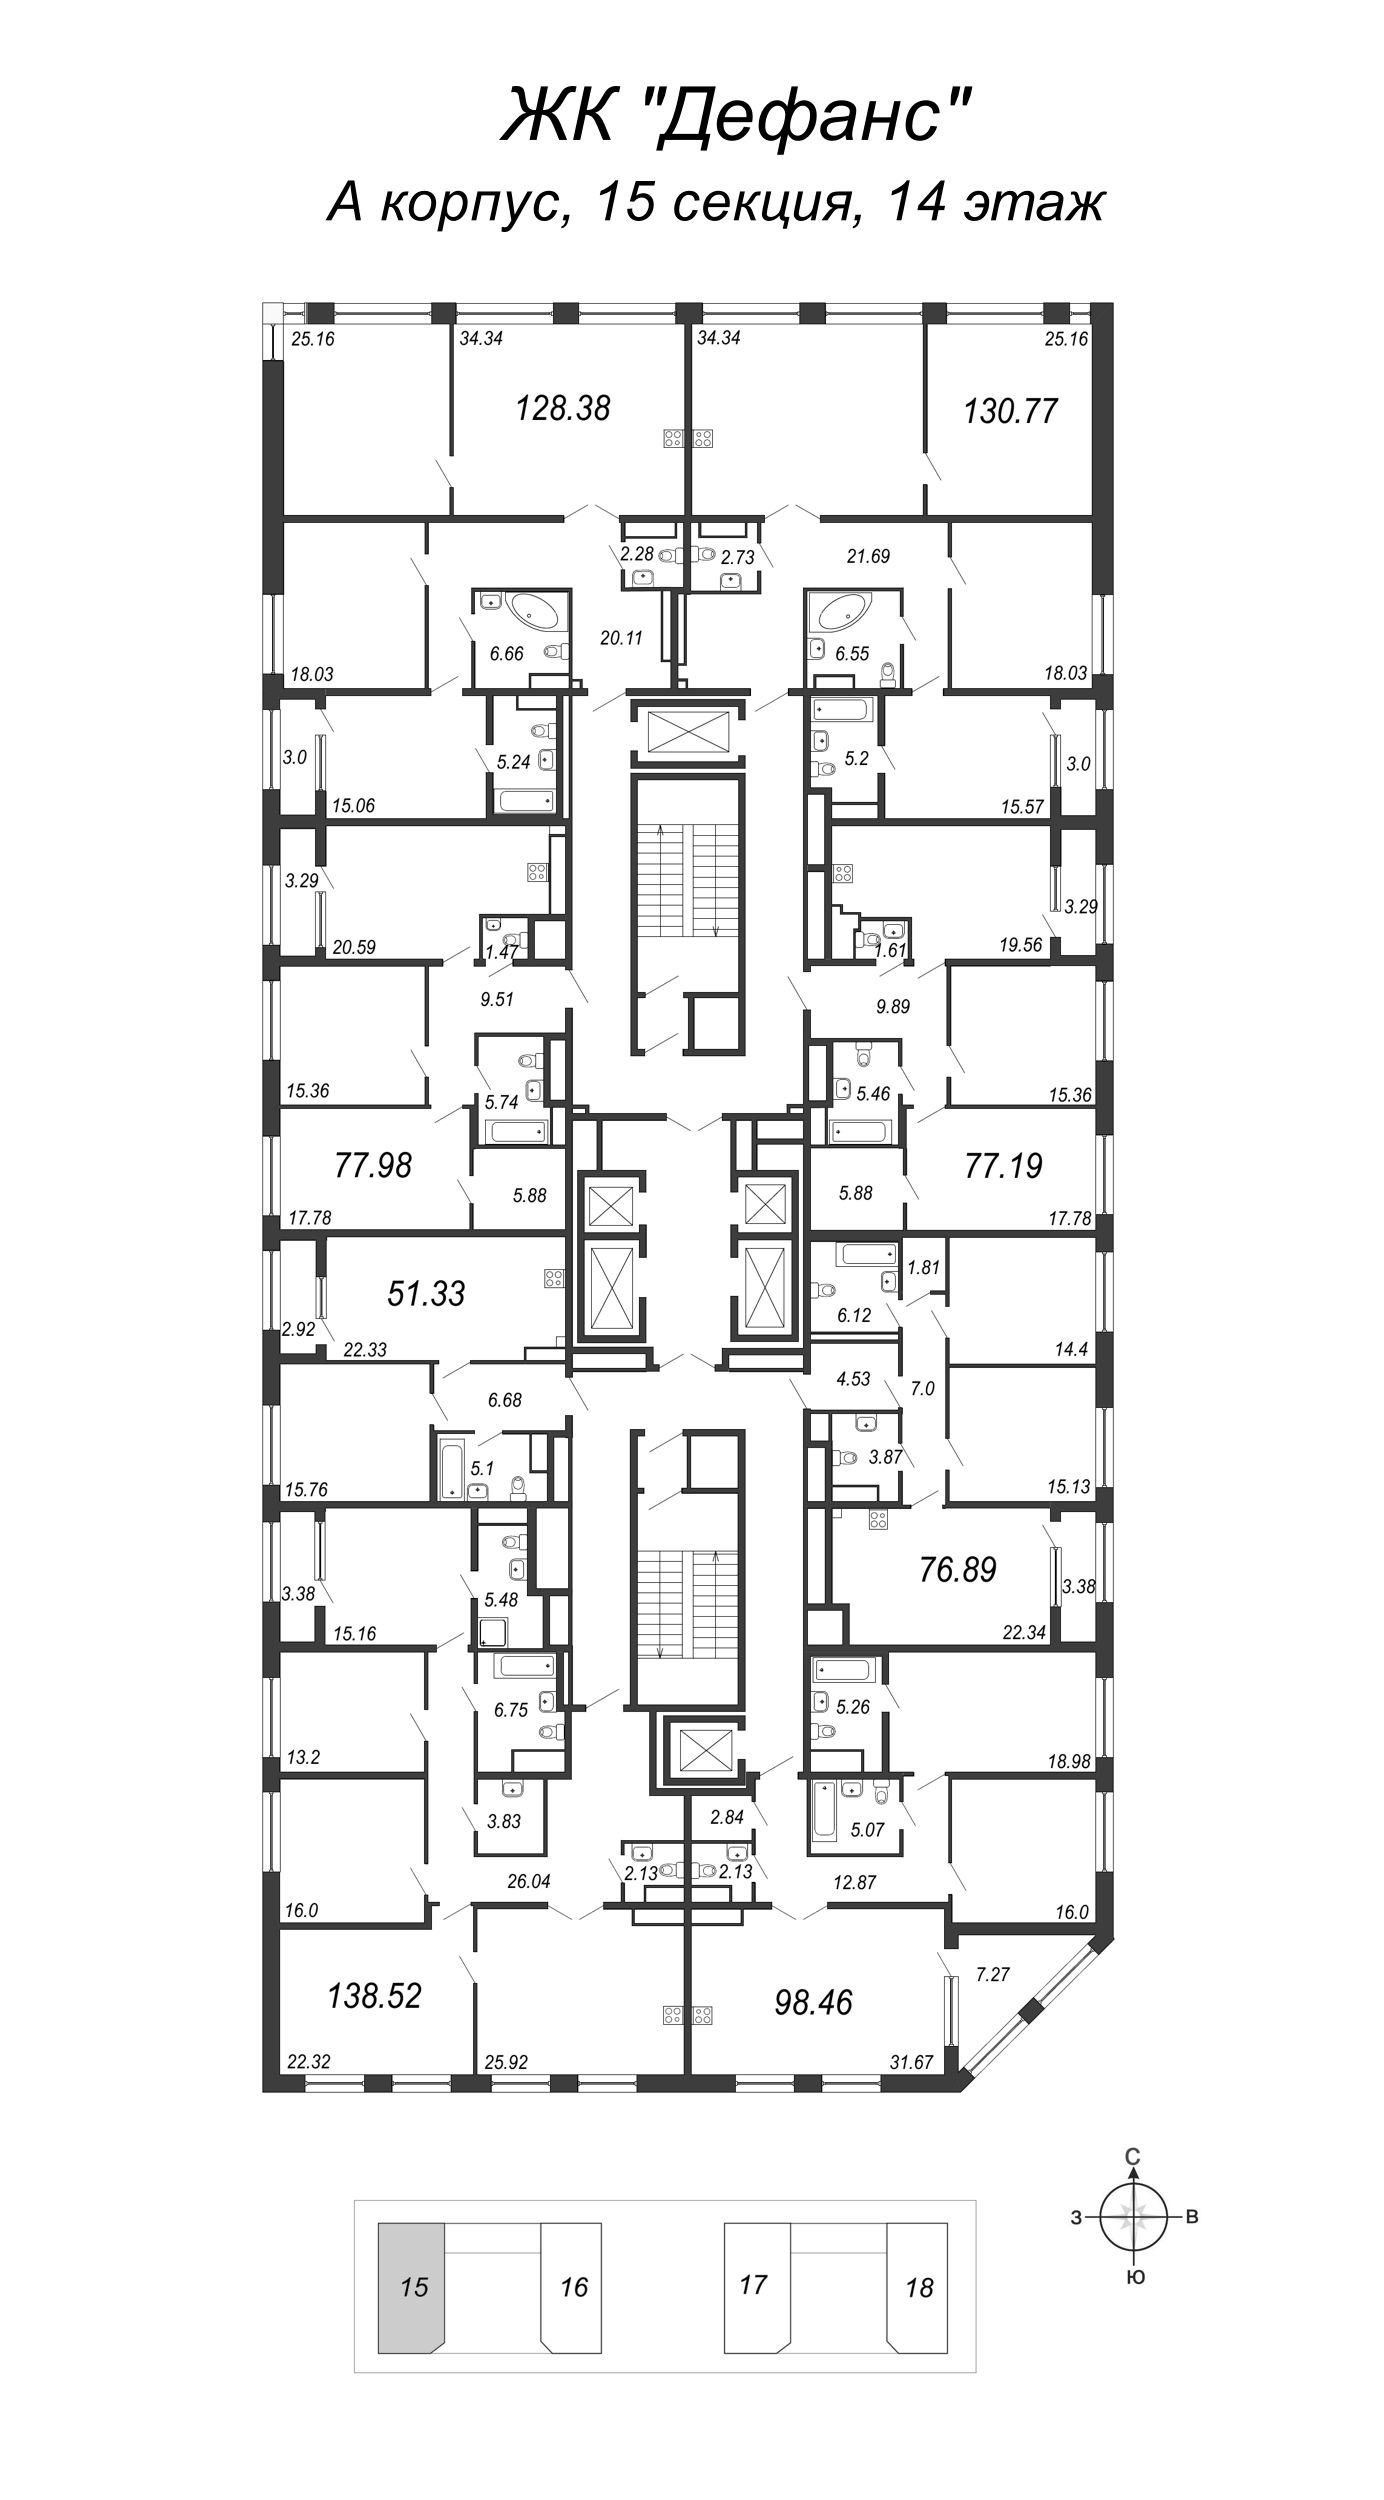 5-комнатная (Евро) квартира, 138.52 м² - планировка этажа